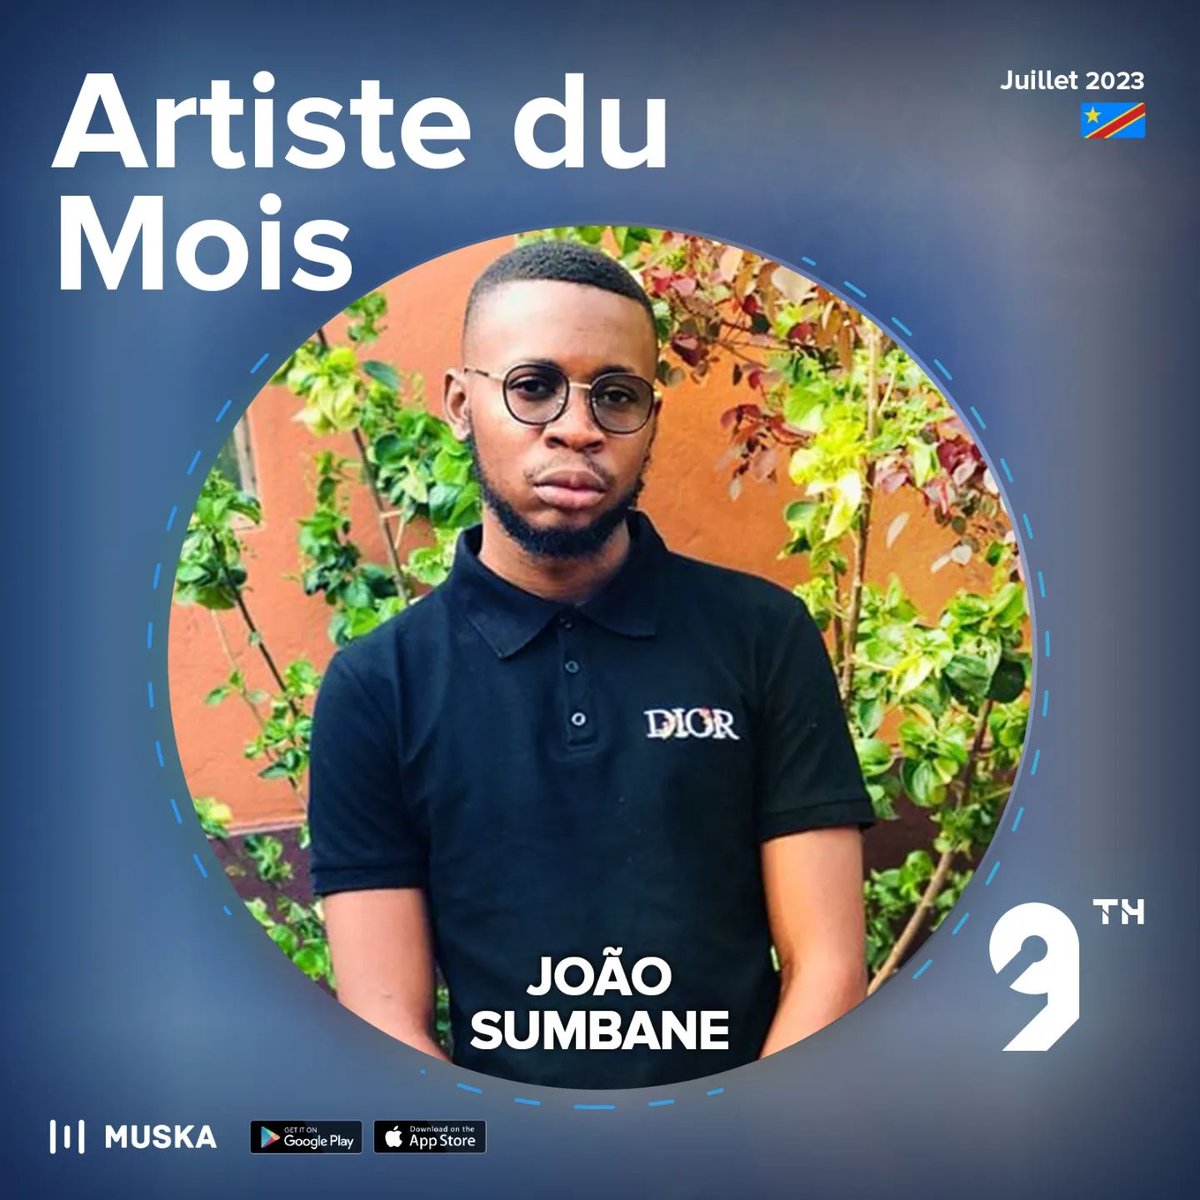 Muska RDC🇨🇩 Découvrez le classement du top 10 Muska RDC du mois de juillet 2023!!! L'artiste #Joao Sumbane occupe la 9e place de ce classement du mois 🏅🎧 Téléchargez l'app 👉 bit.ly/Muskaapp 📲 #muska #classement #muskatop10 #juillet23